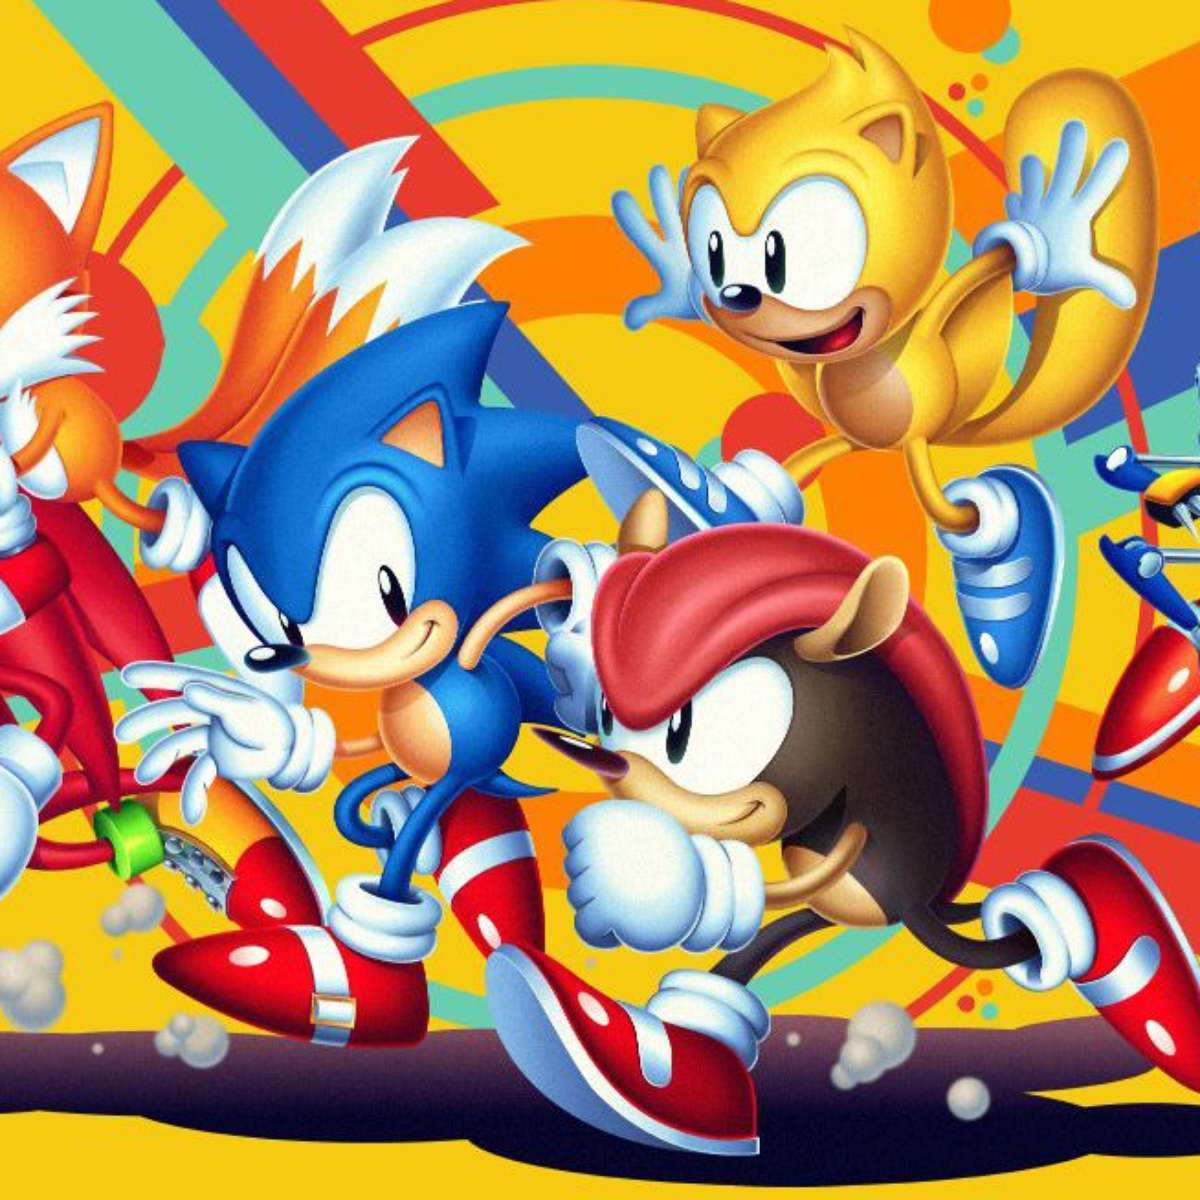 Jogo Sonic Classic Heroes 2022 no Jogos 360